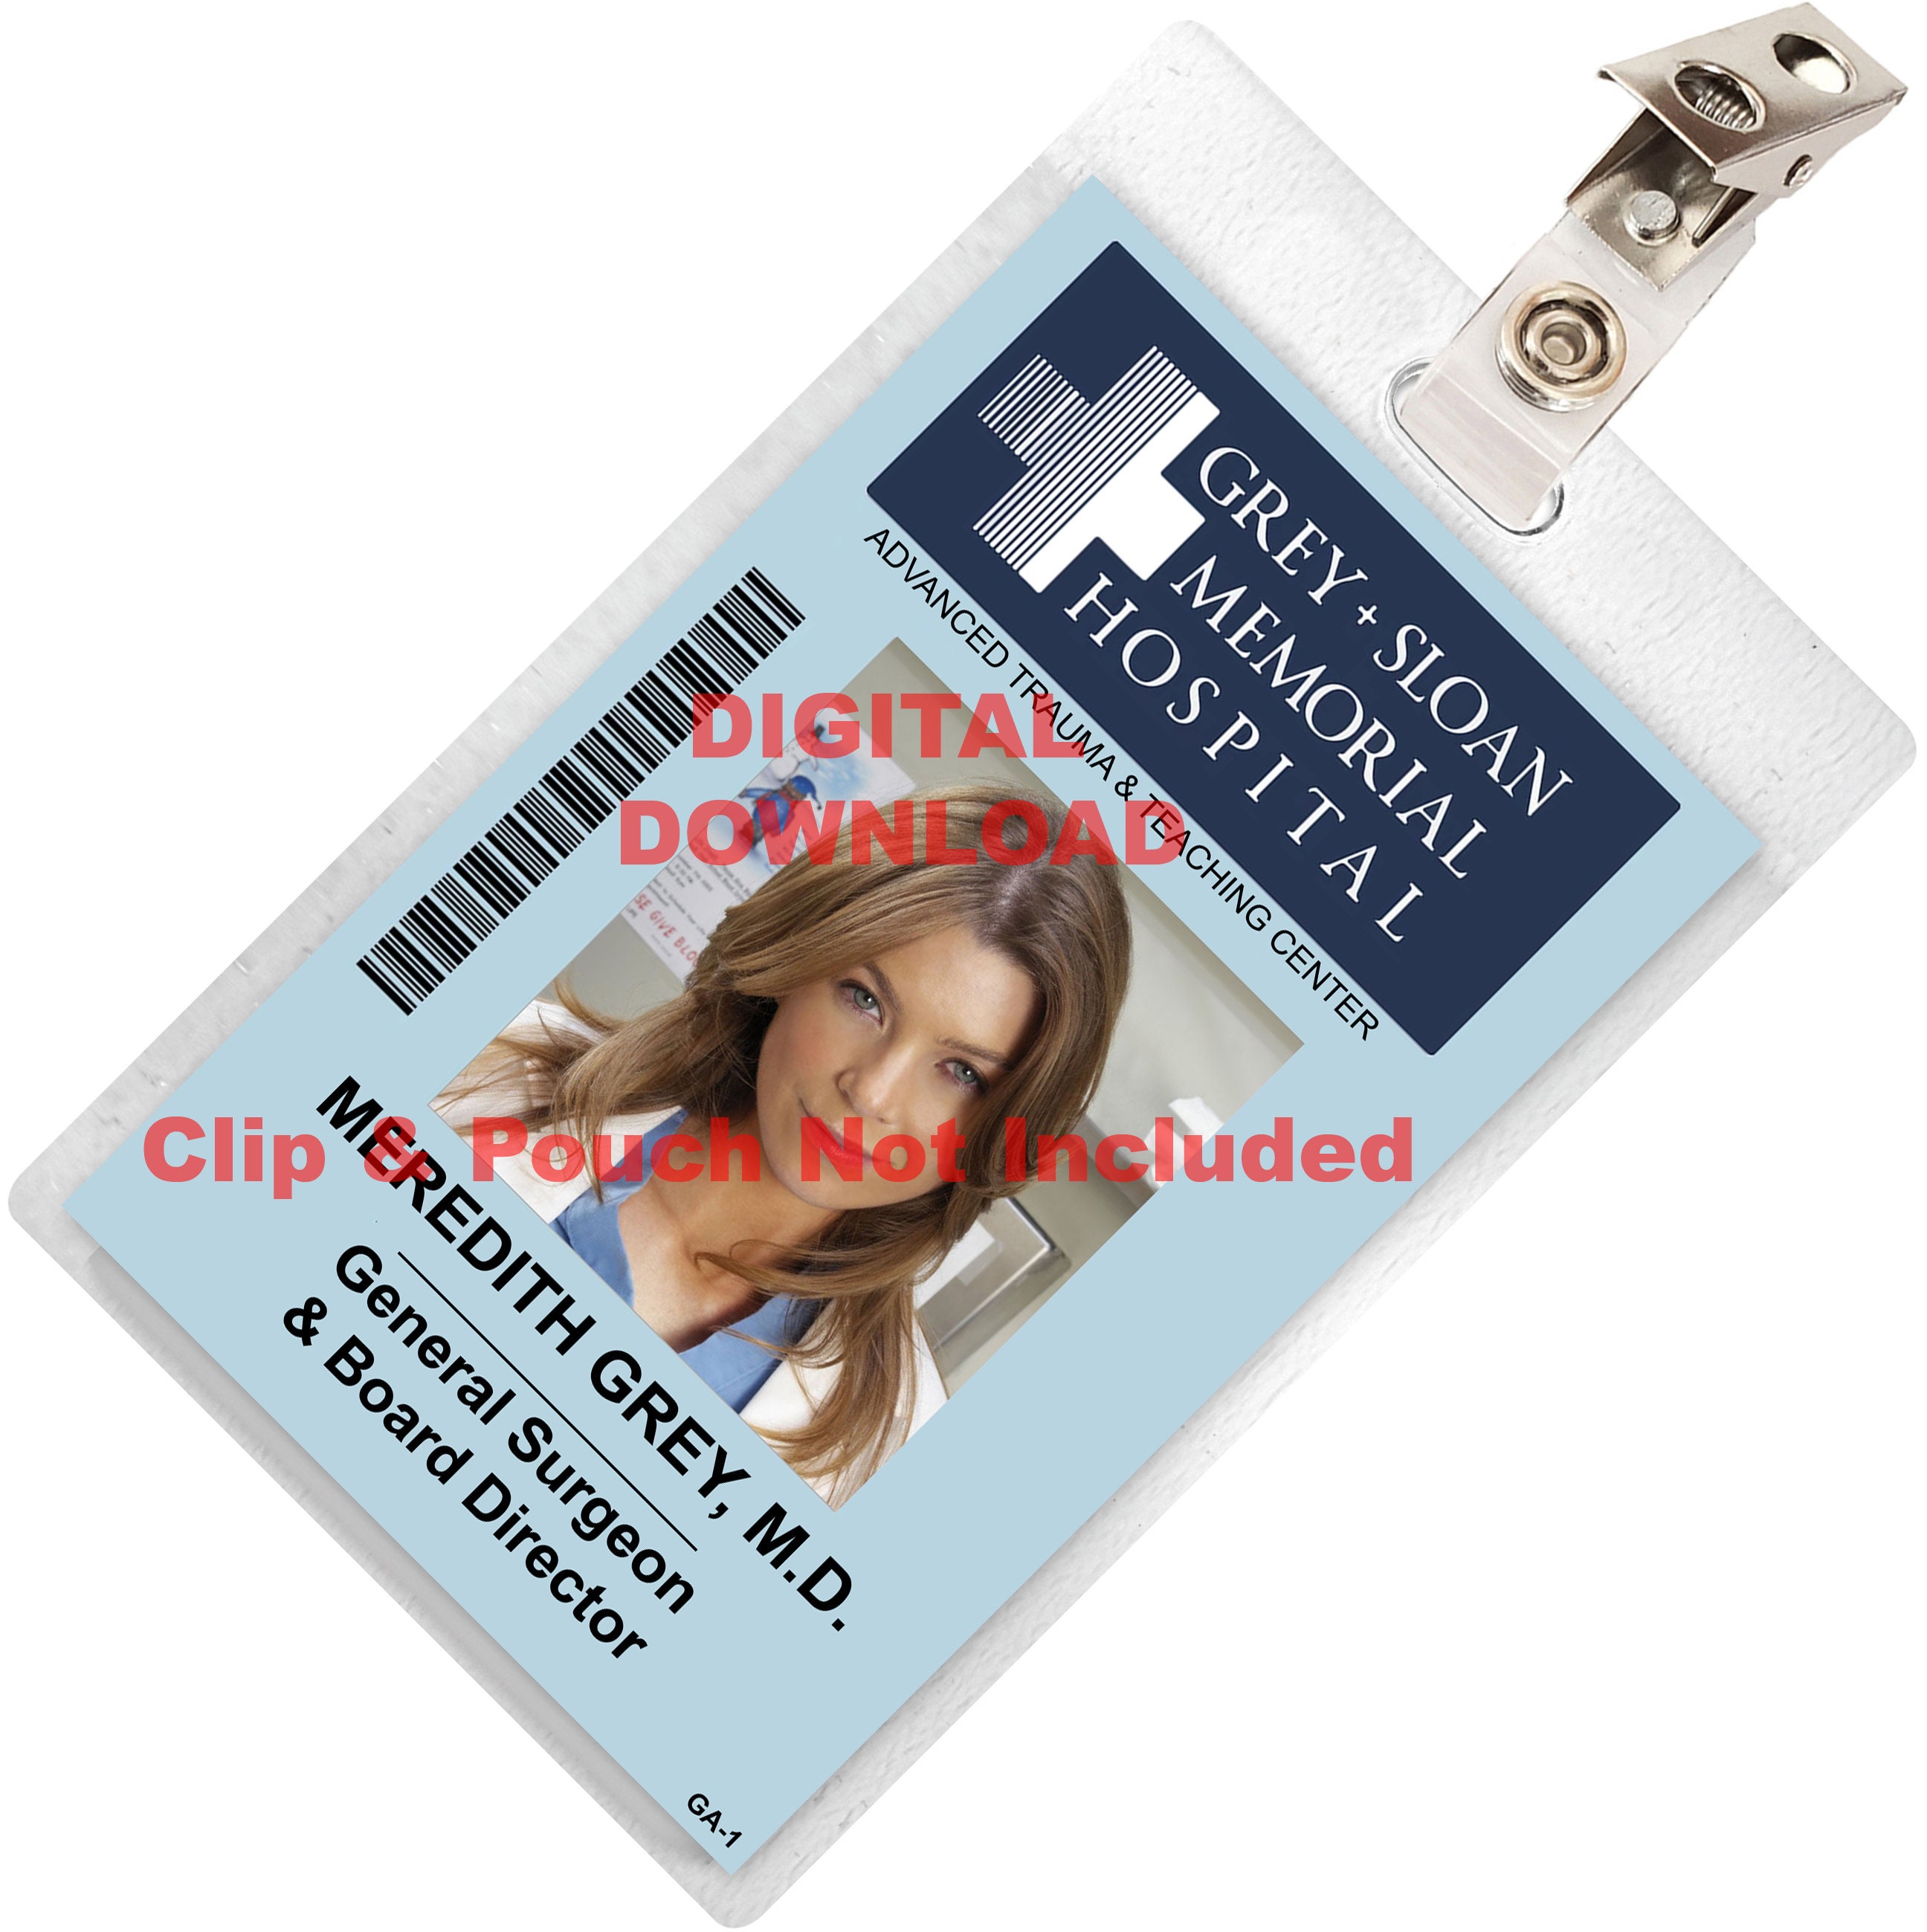 Grey's Anatomy MEREDITH GREY Sloan Memorial Hospital ID Badge Card Cosplay  Costume Name Tag Image Download 